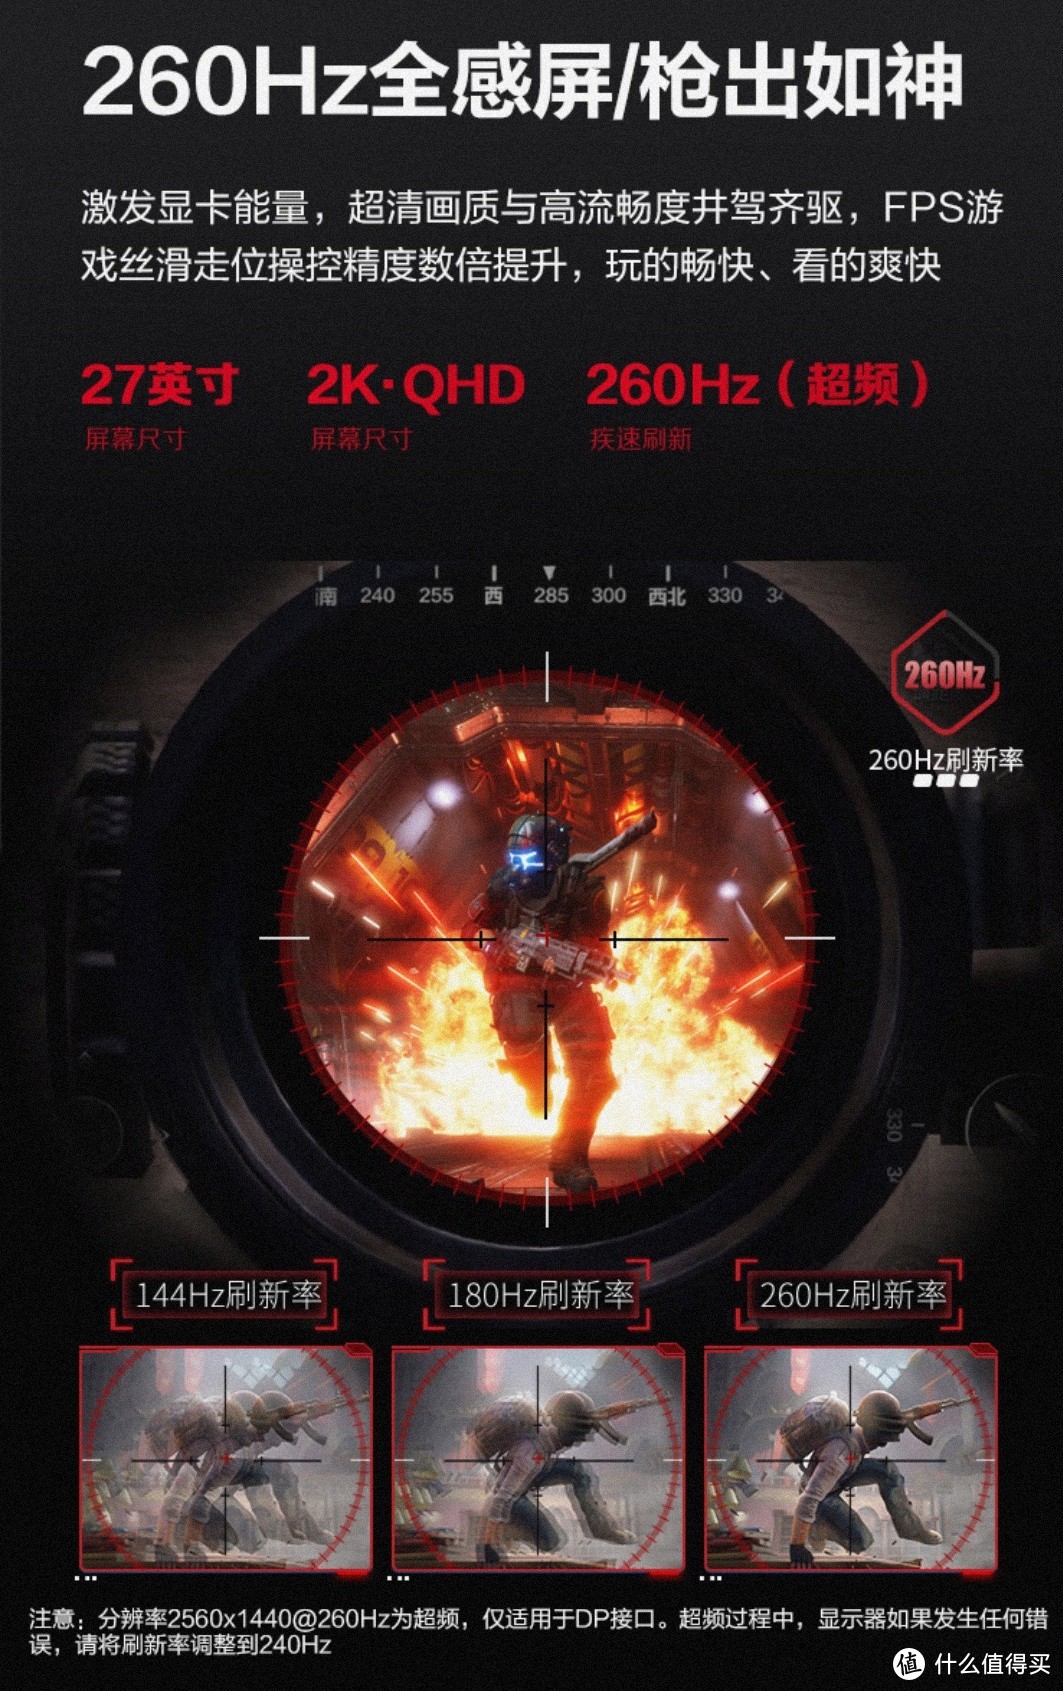 260Hz满血钢炮Max，G-SYNC认证：AOC 27英寸电竞显示器 Q27G3Z/D 上架